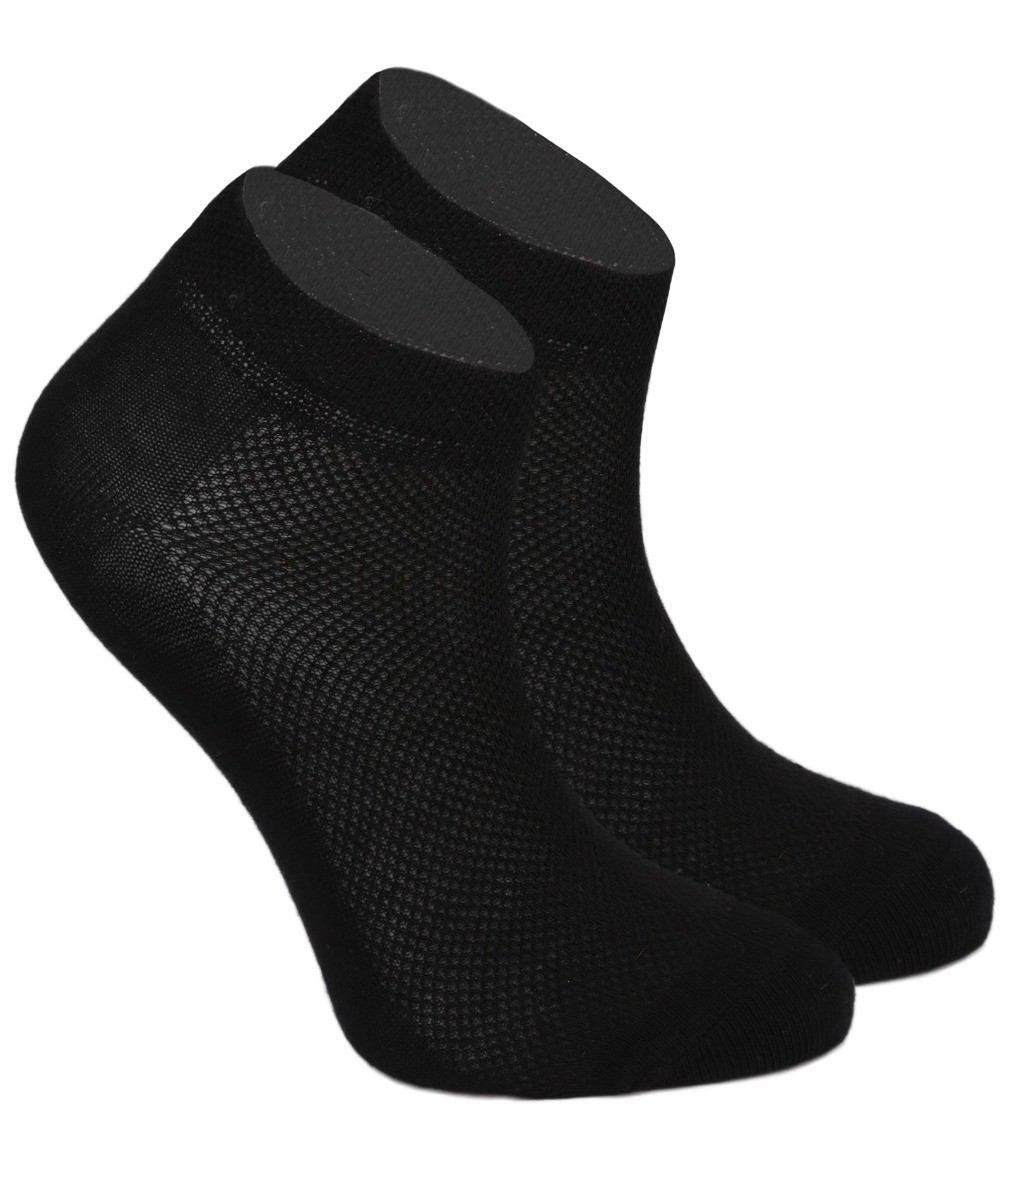 Unisex Stretch Cotton Ankle Socks, for Boys & Girls